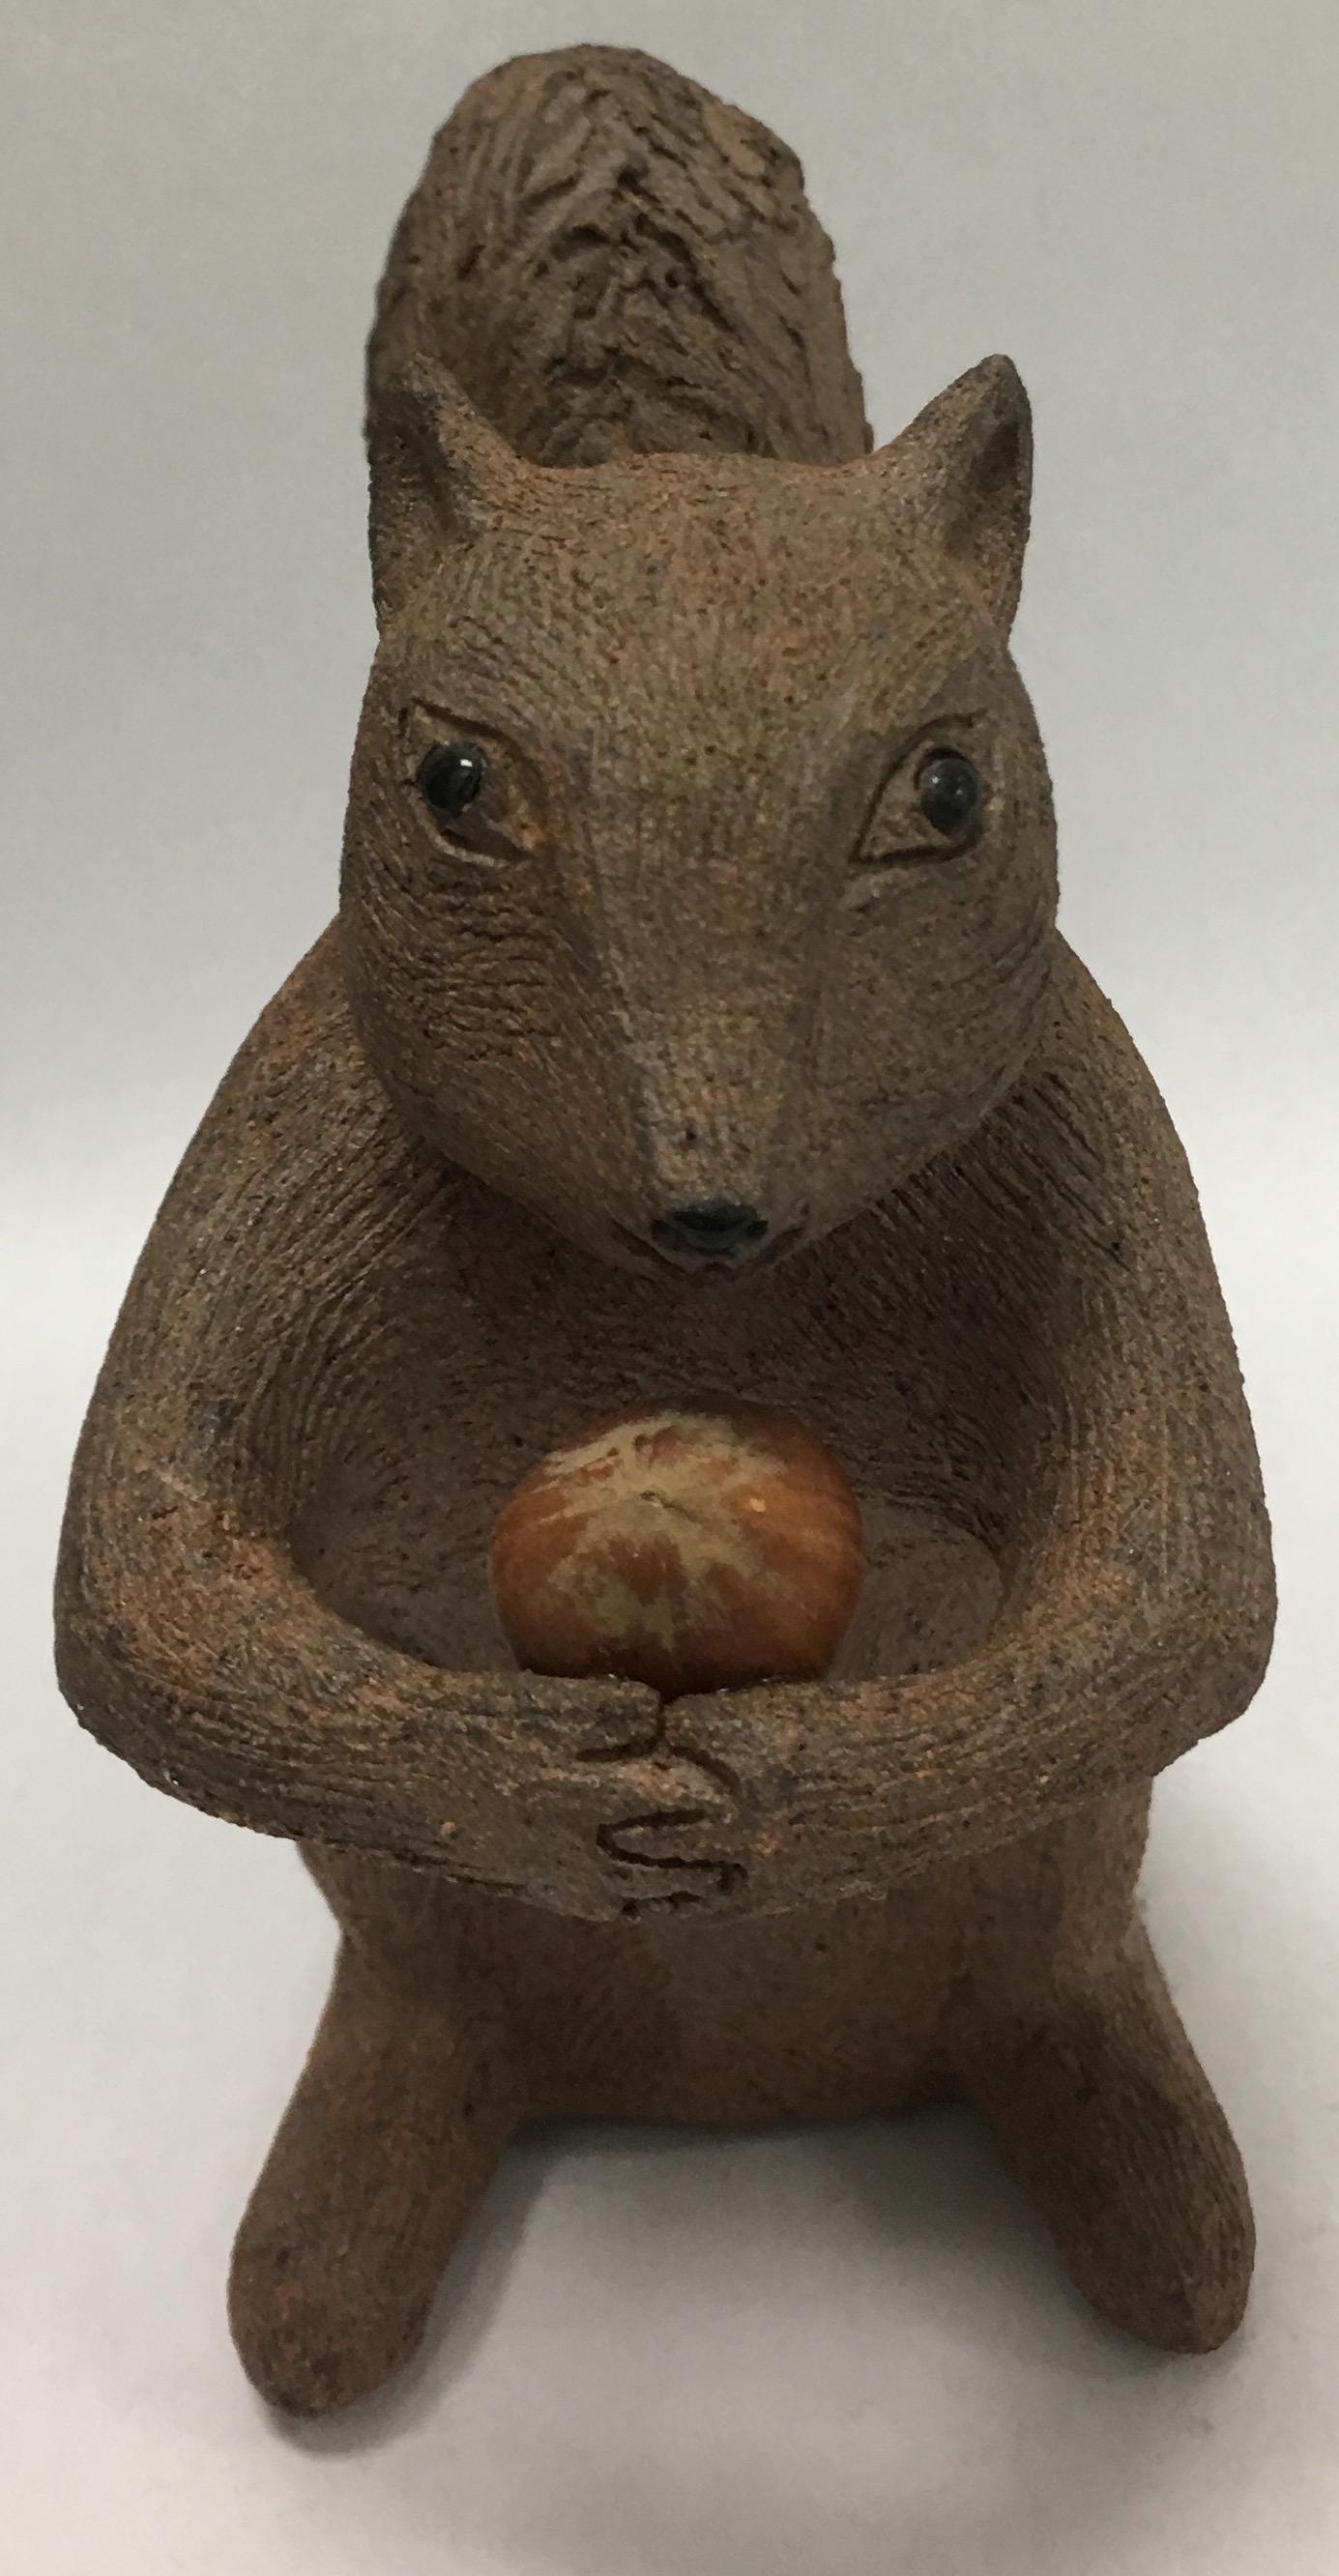 Midcentury handmade terra cotta squirrel figurine.